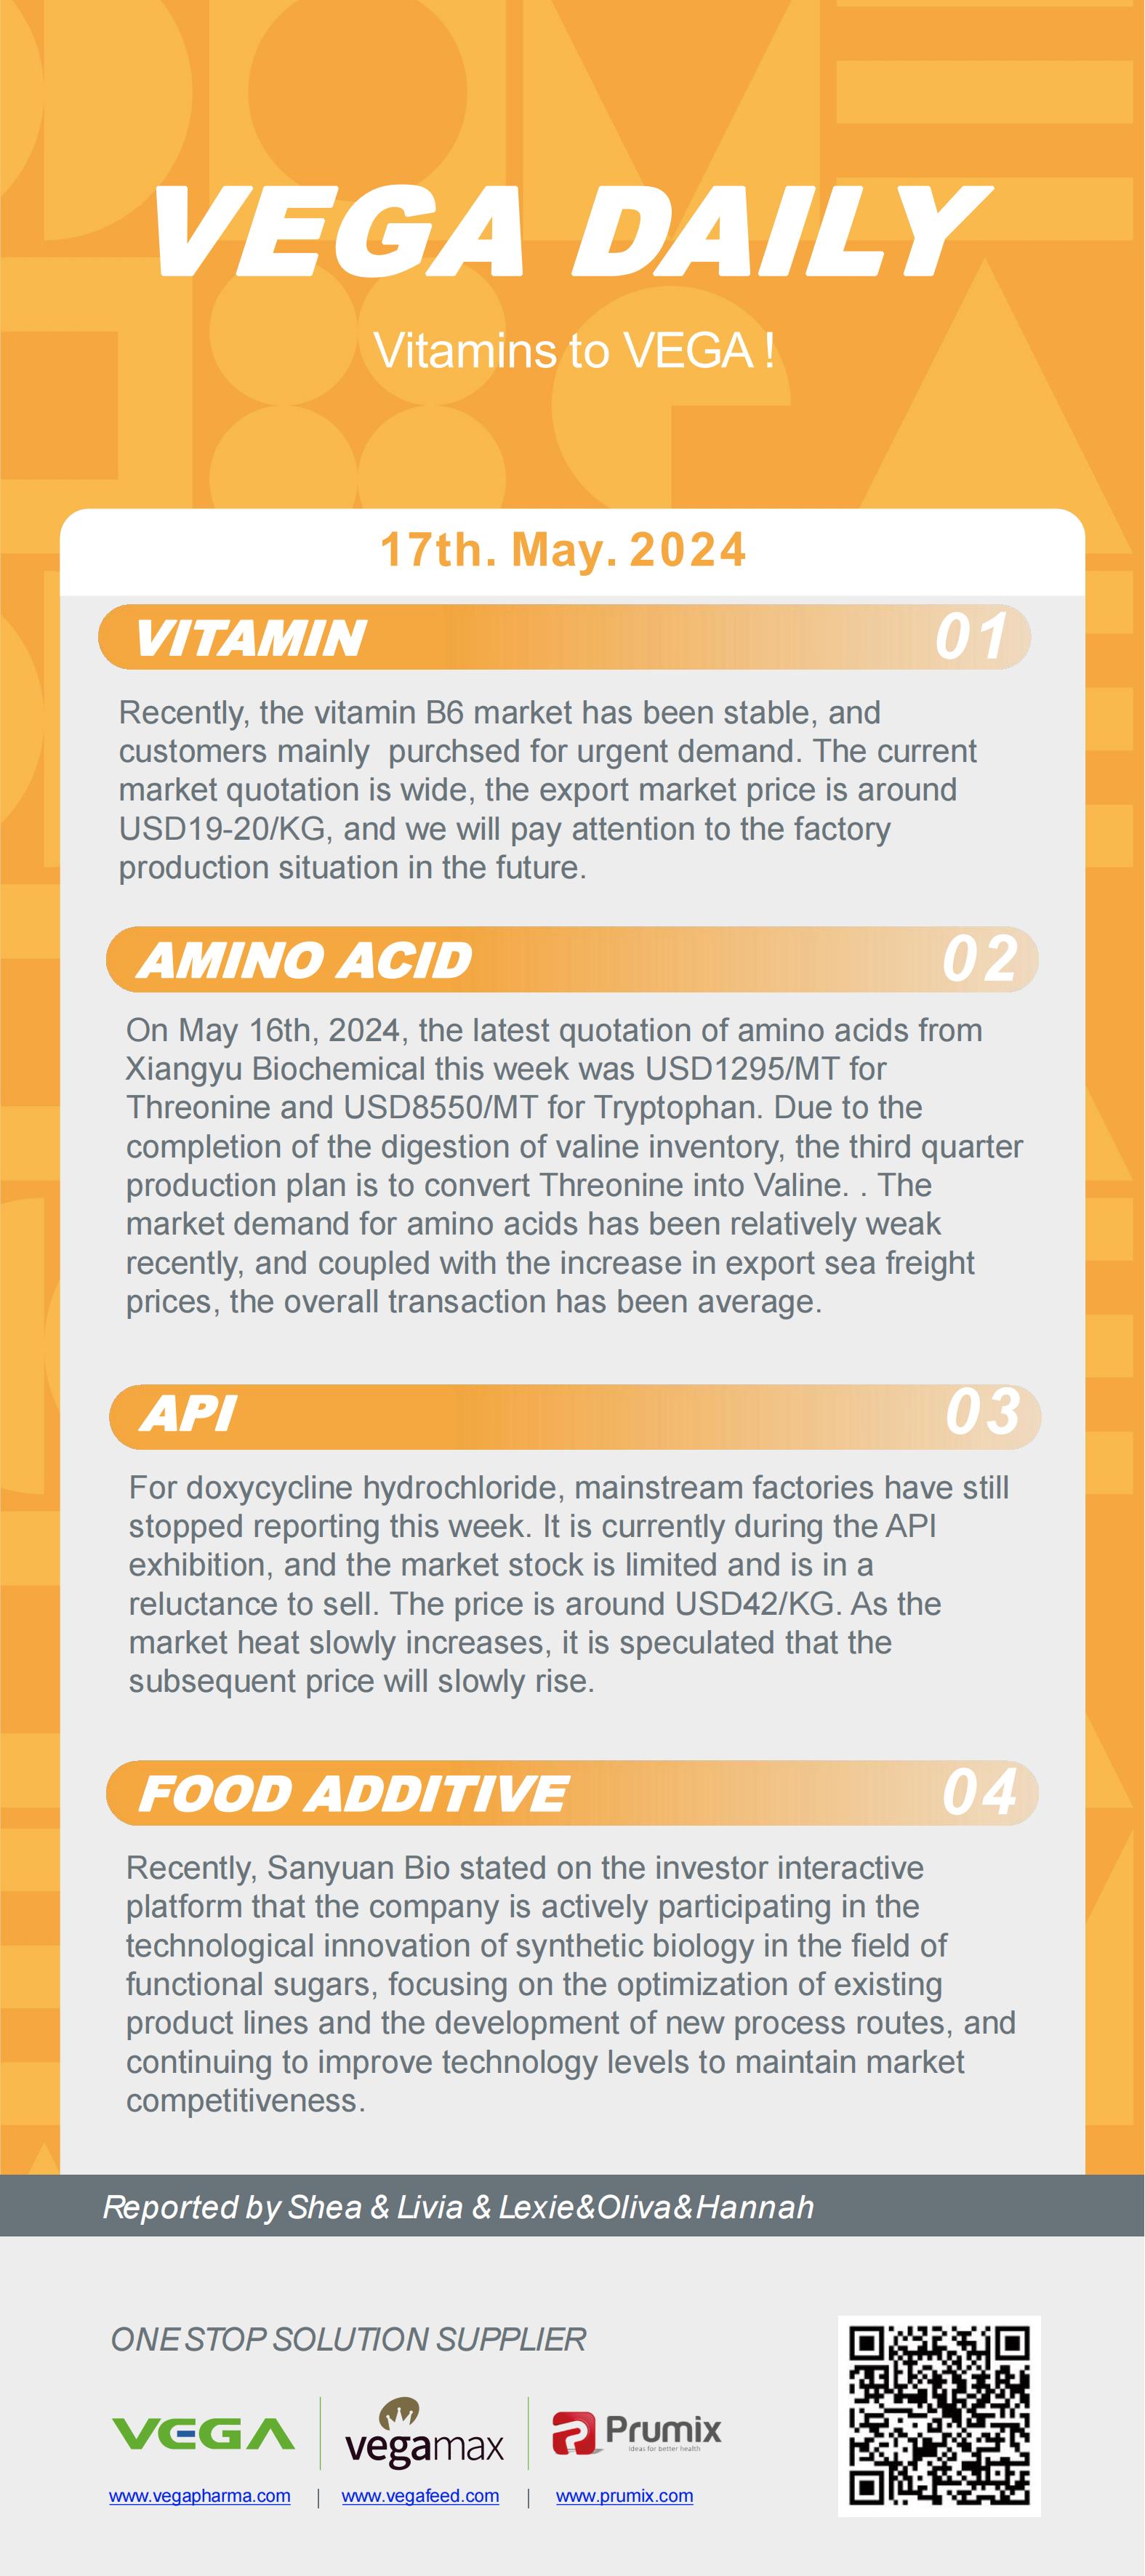 Vega Daily Dated on May 17th 2024 Vitamin Amino Acid APl Food Additives.jpg